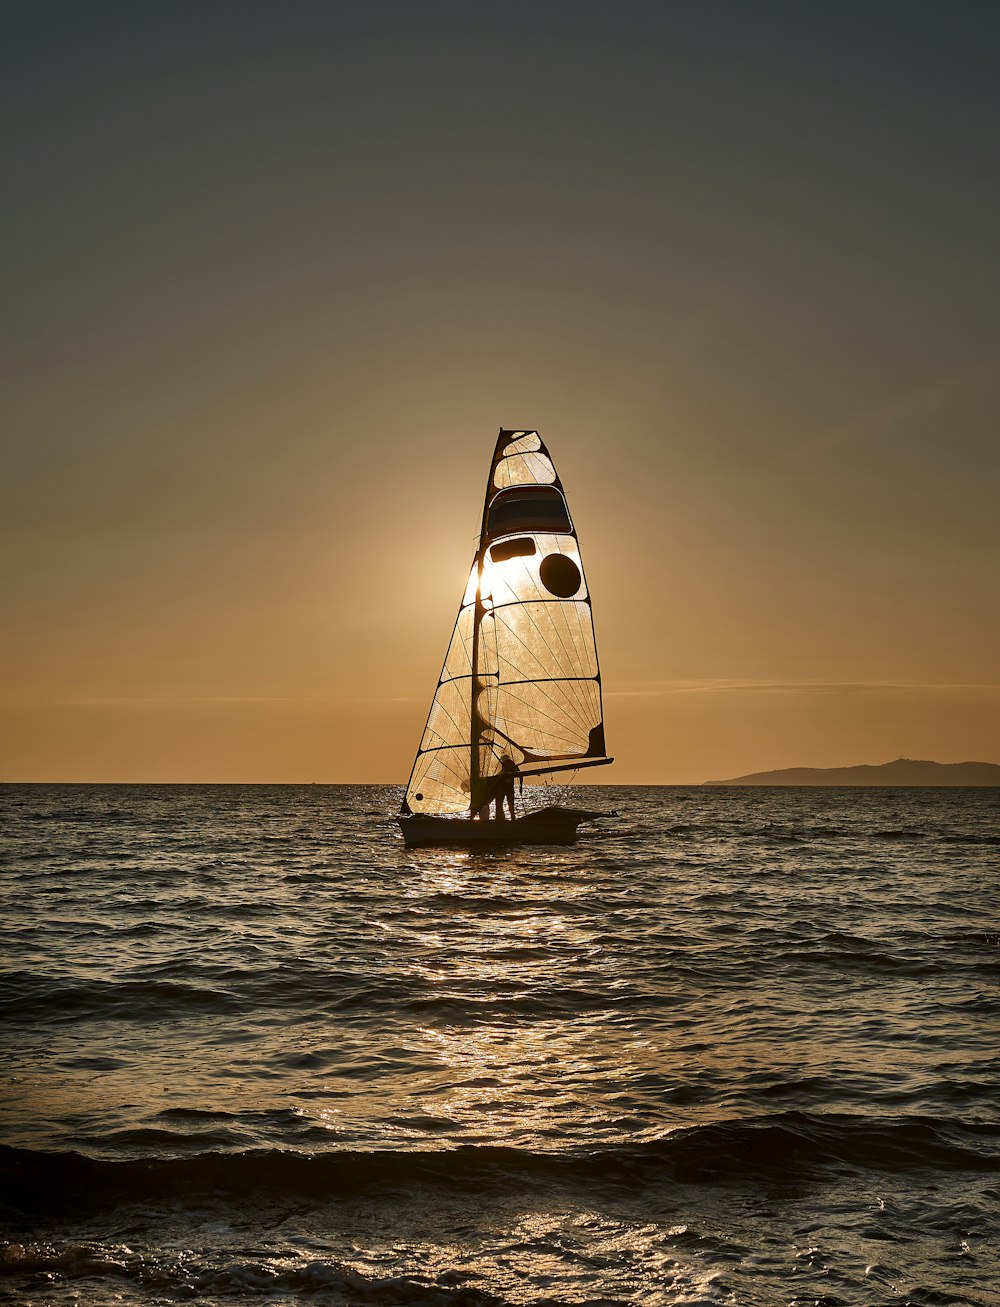 a sailboat sailing on the ocean at sunset